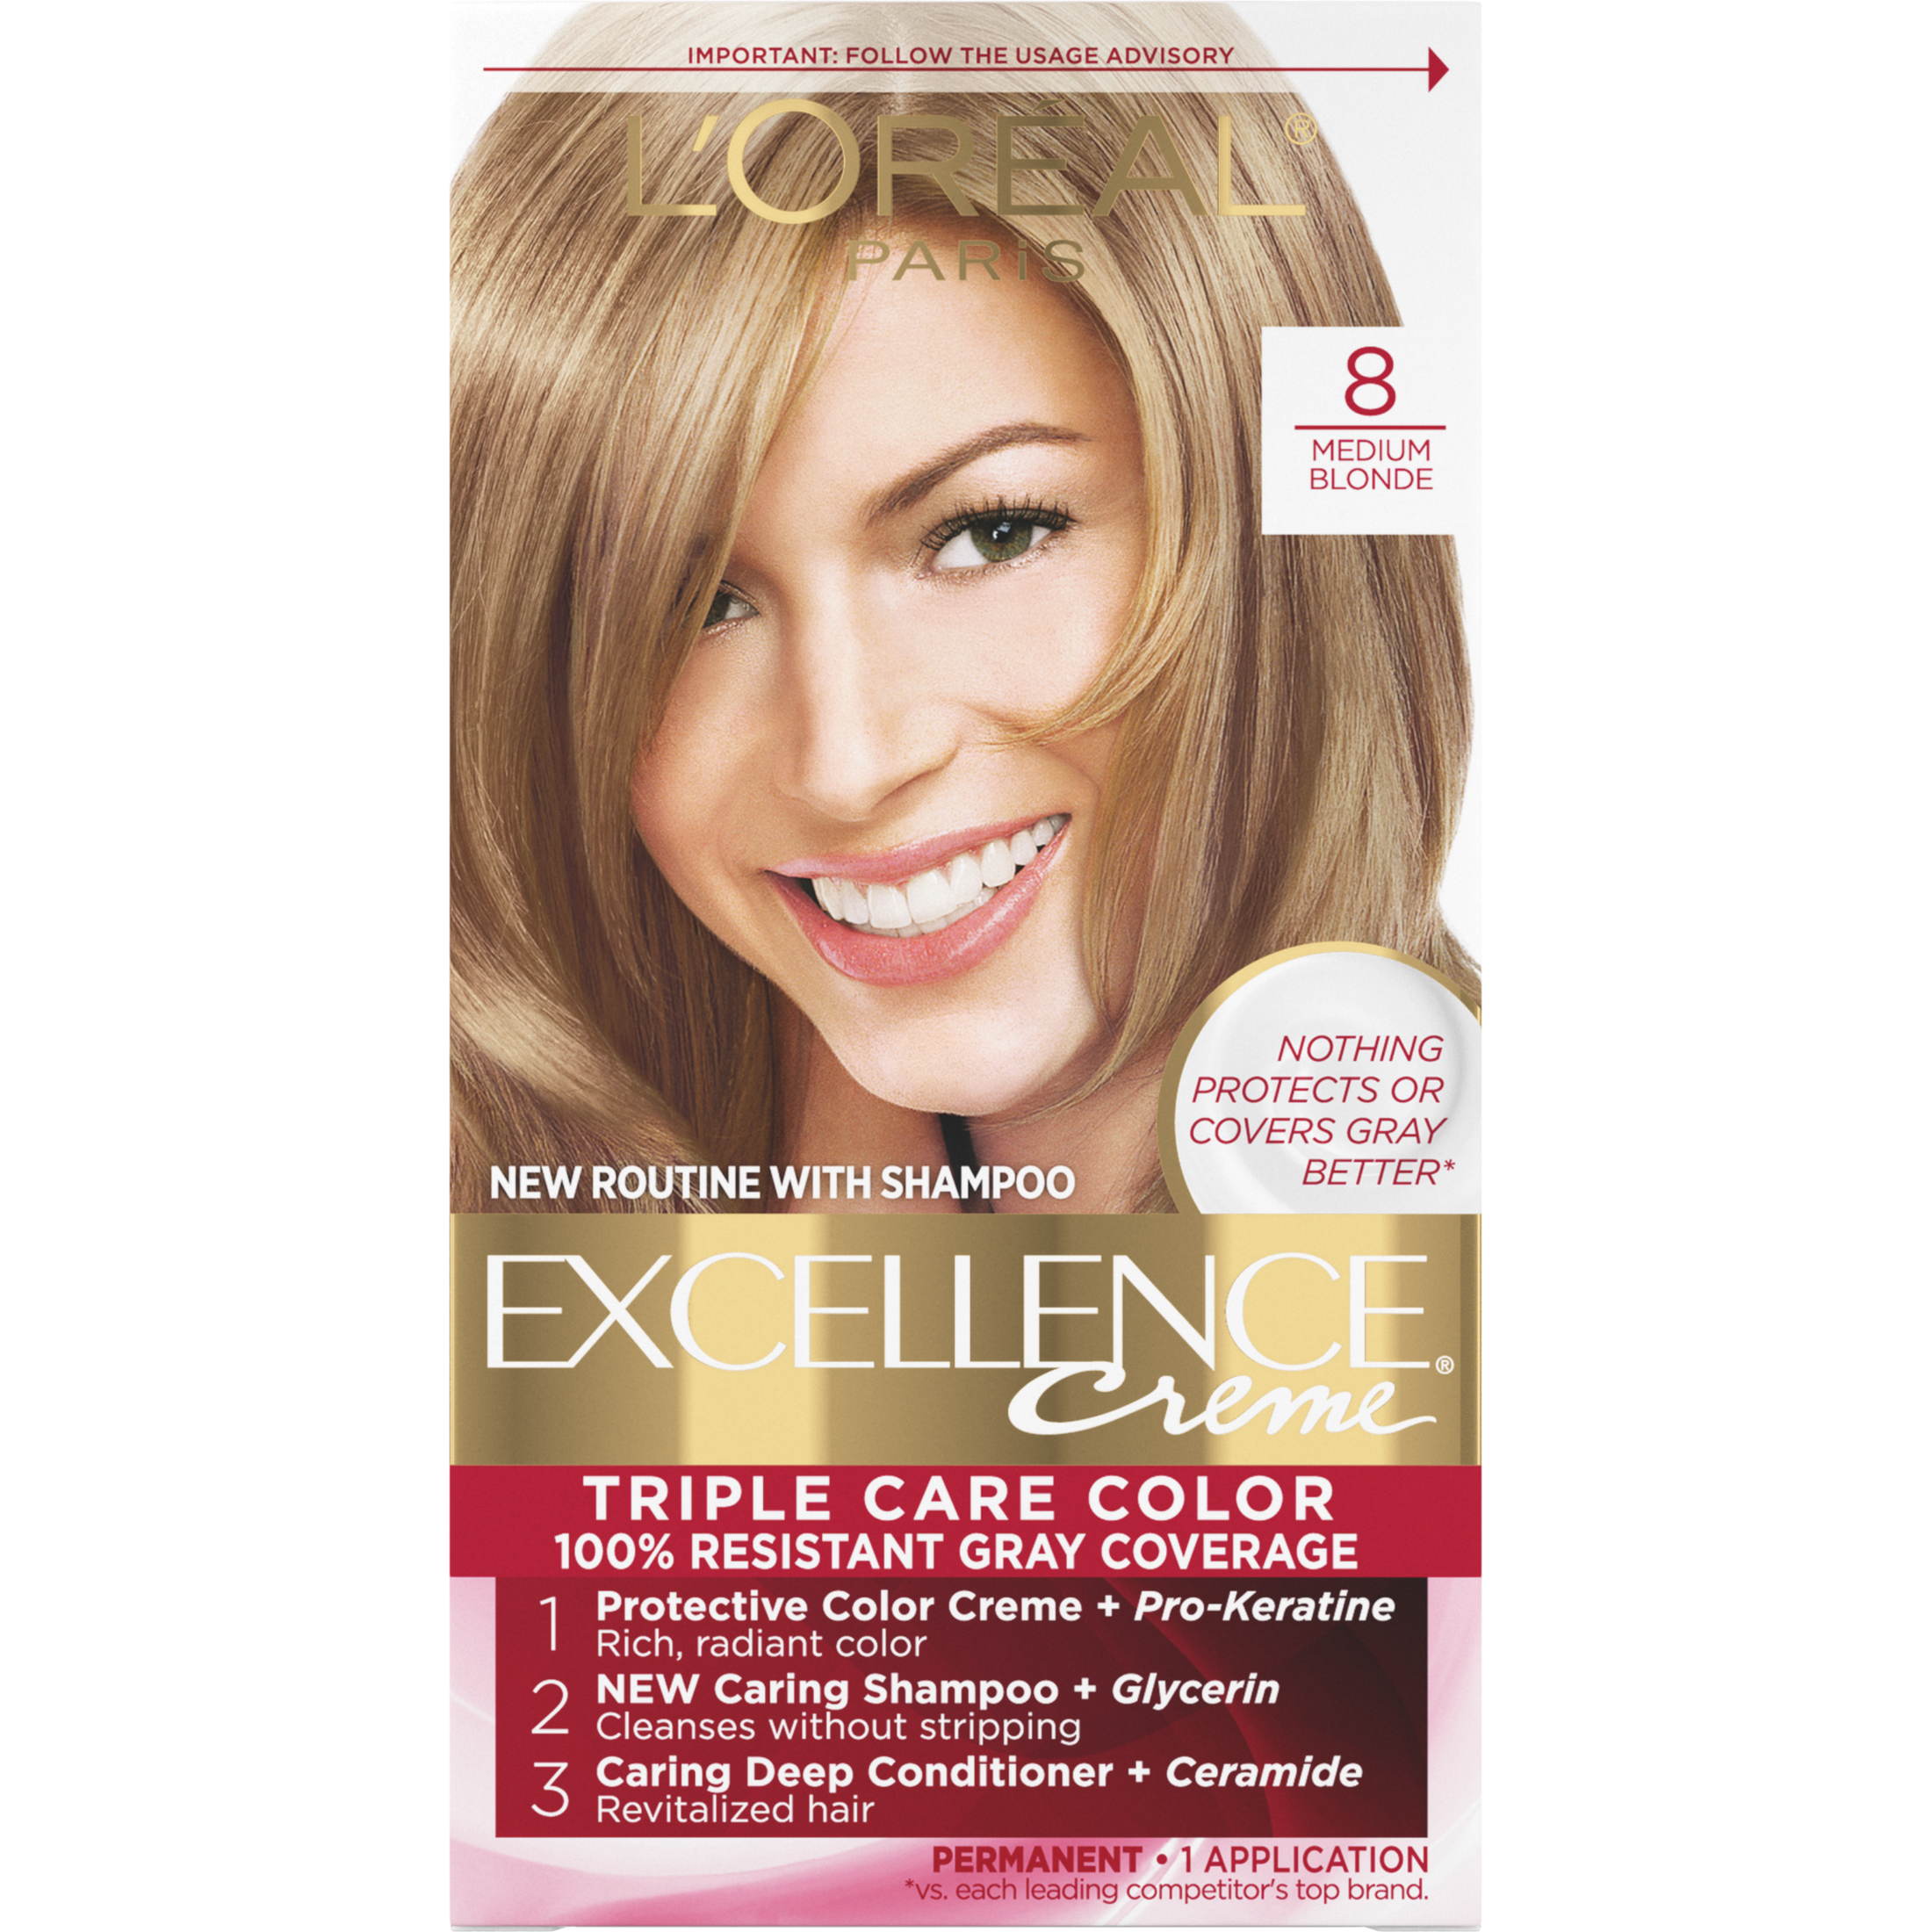 L'Oreal Paris Excellence Creme Permanent Hair Color, 8 Medium Blonde - image 1 of 8